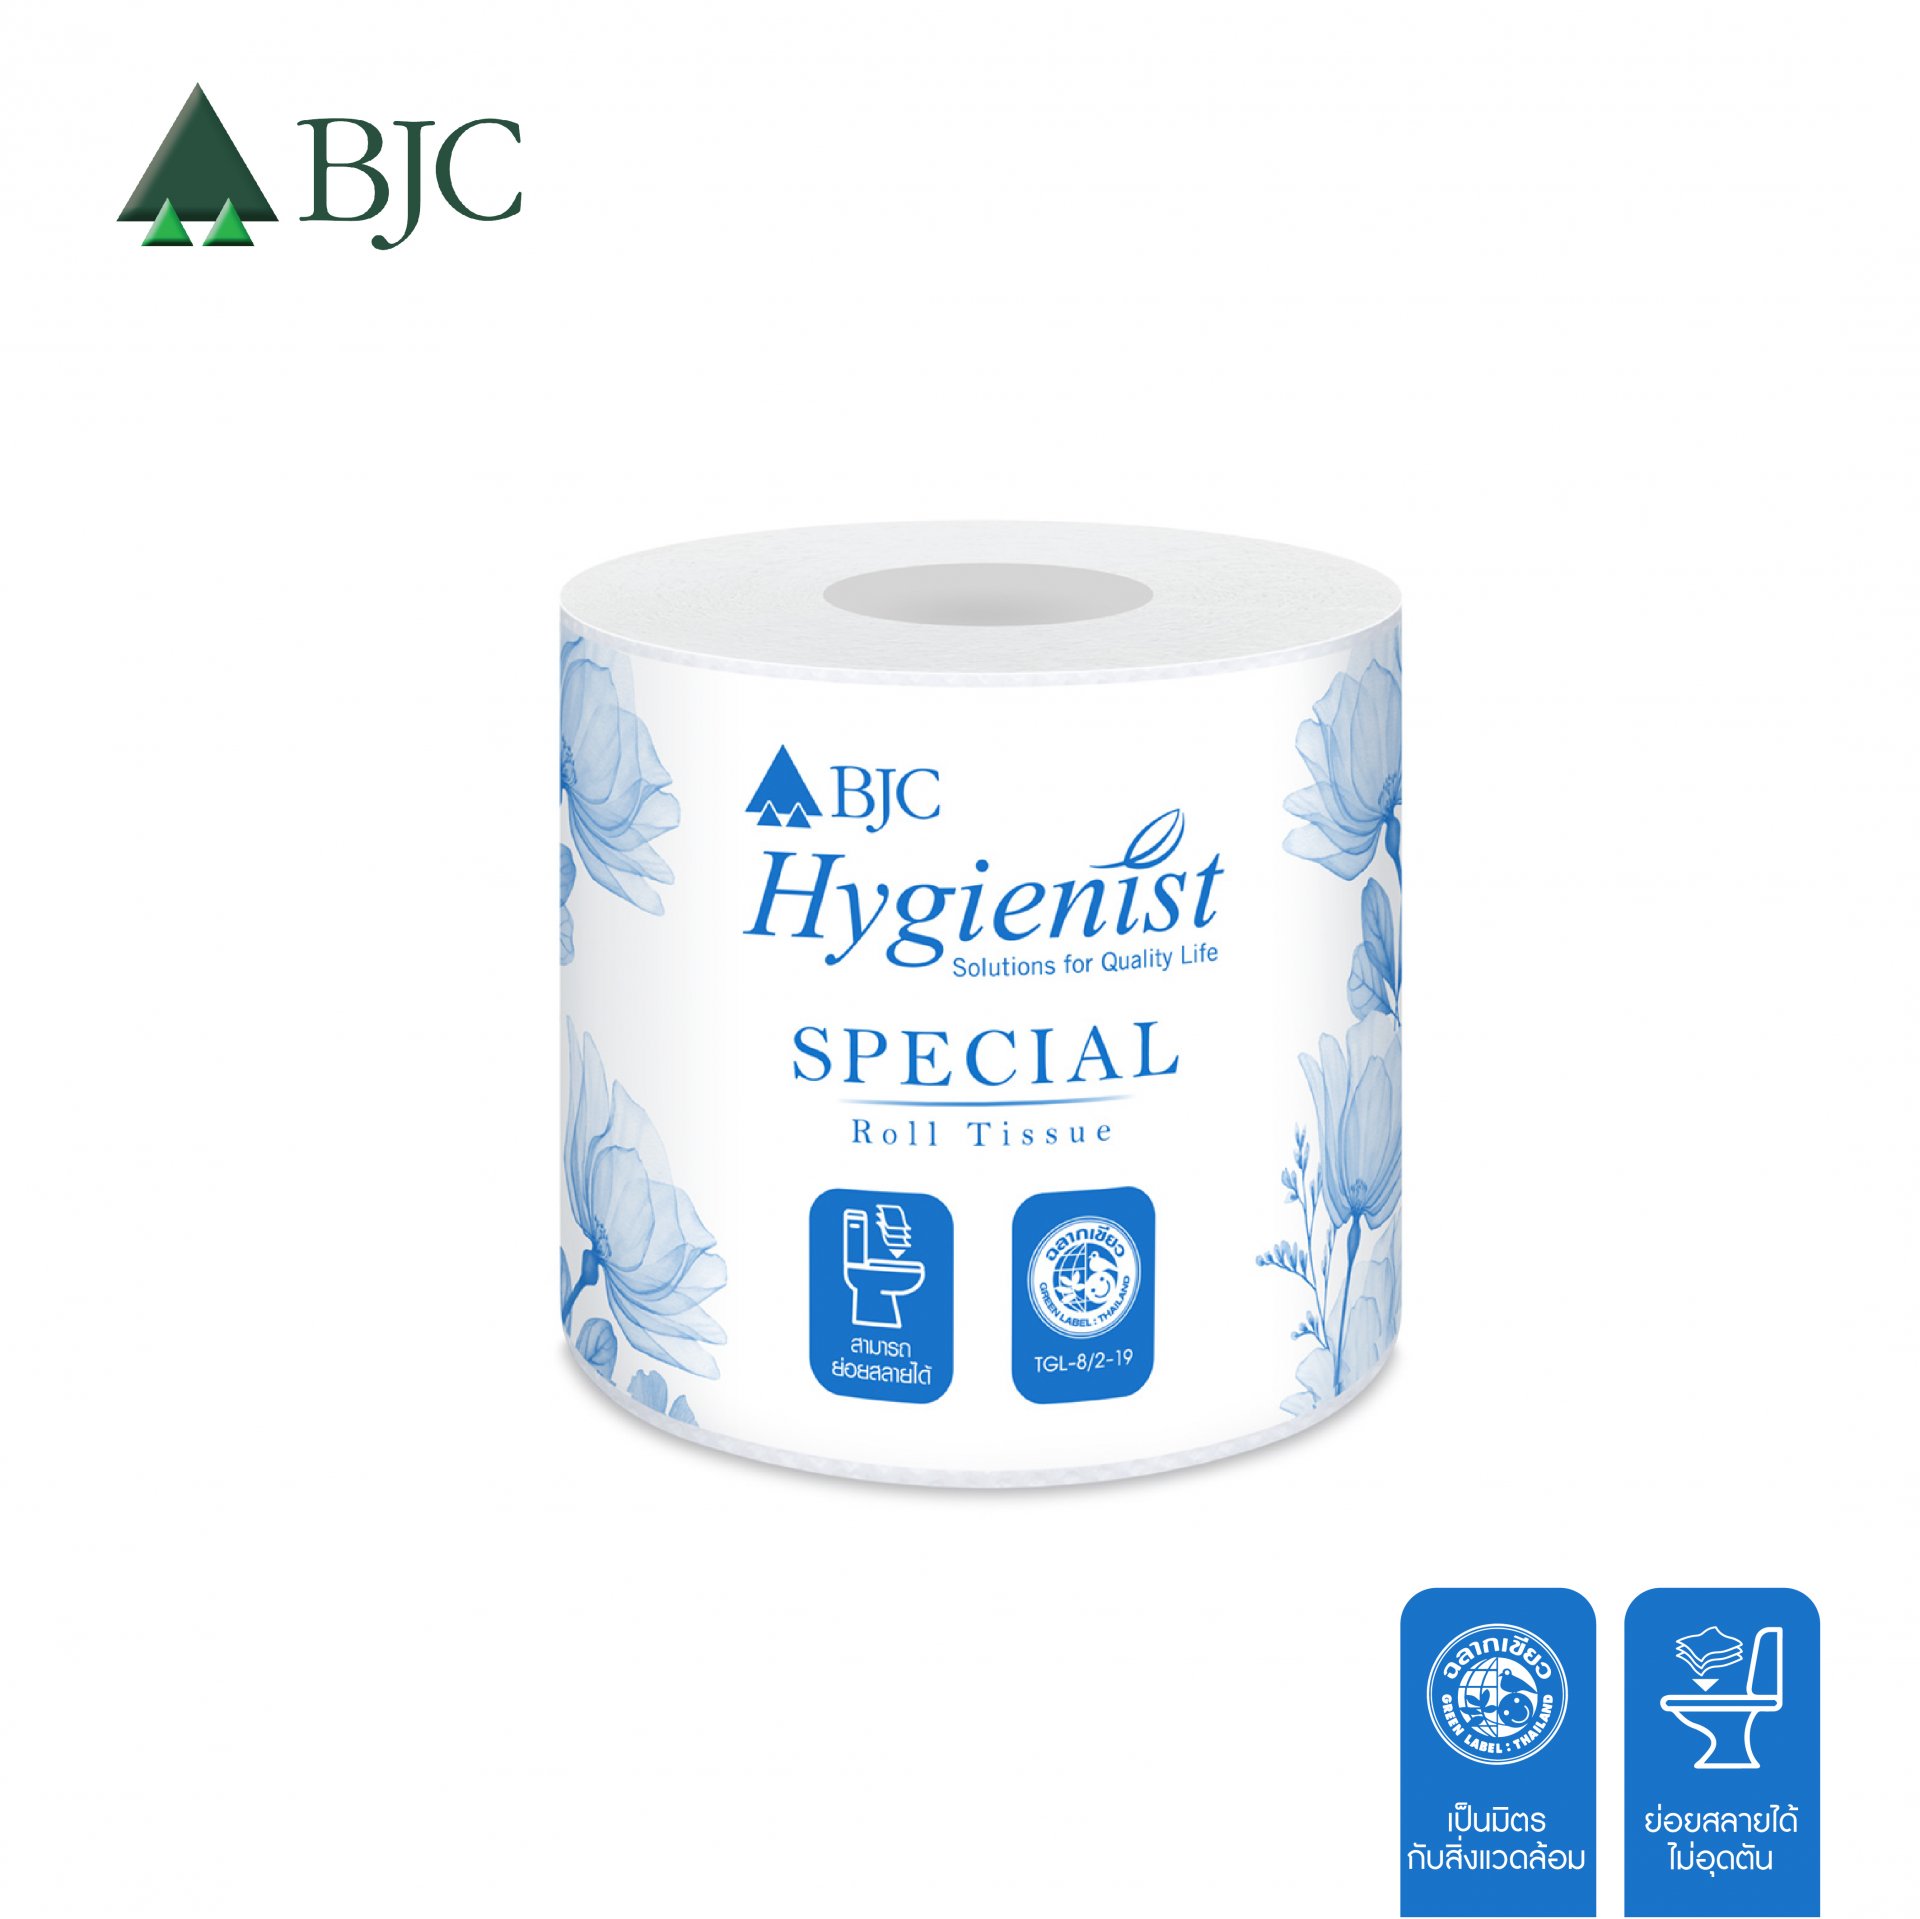 BJC Hygienist Special Roll Tissue 1"r